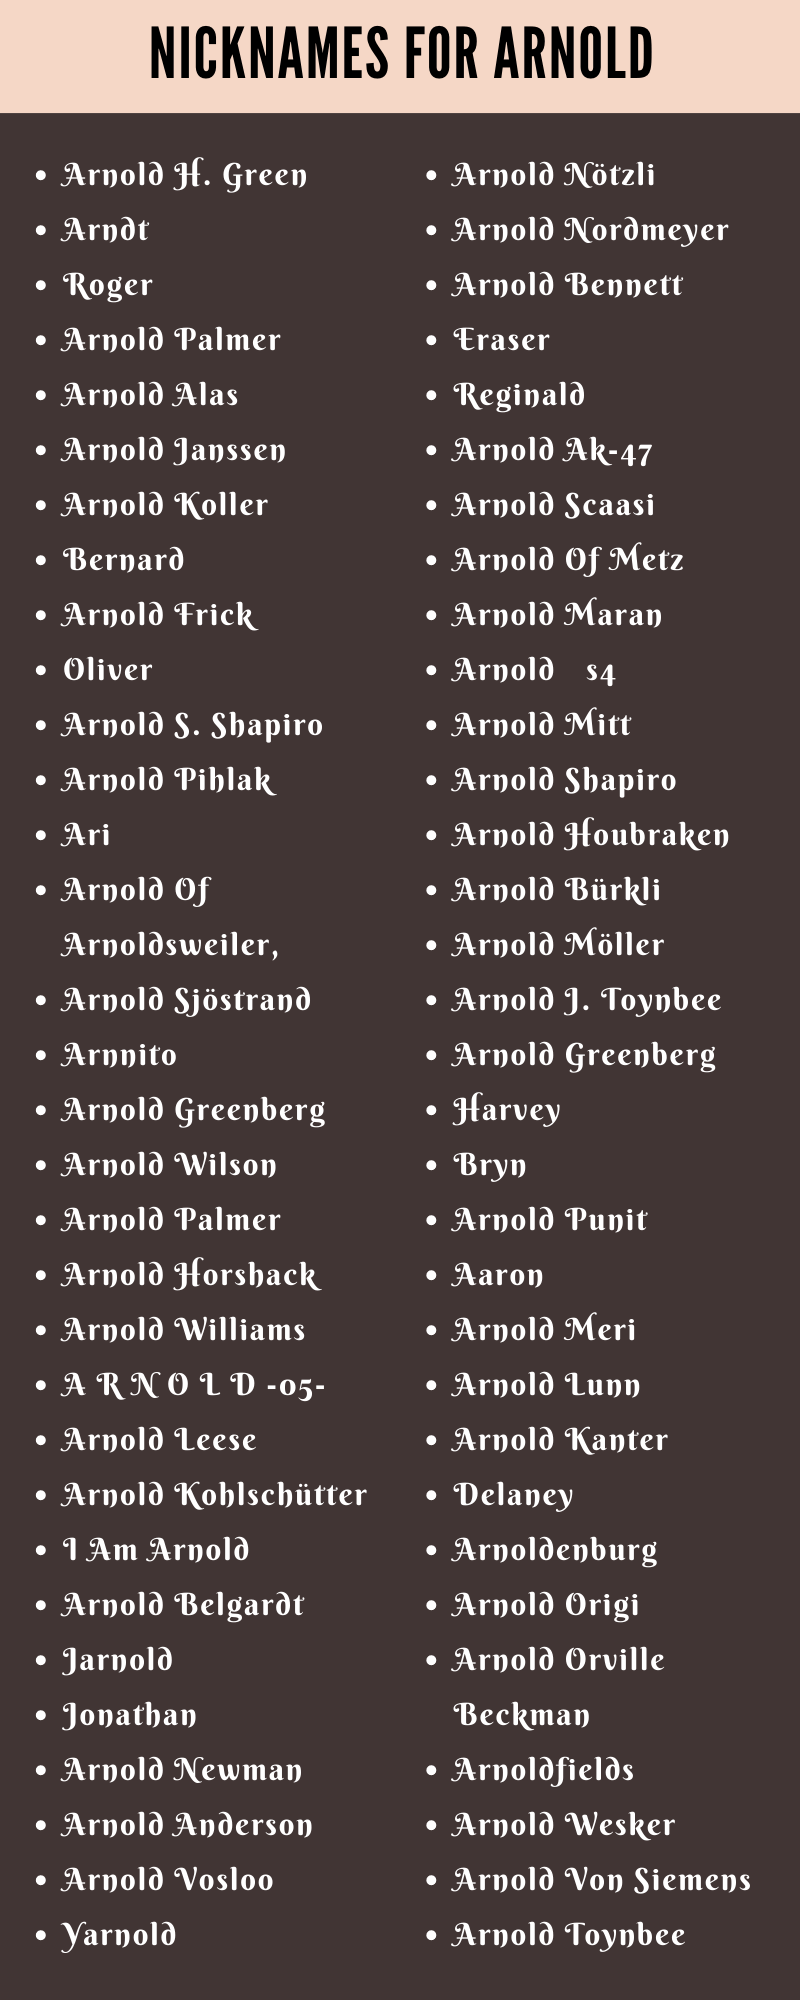 Nicknames for Arnold